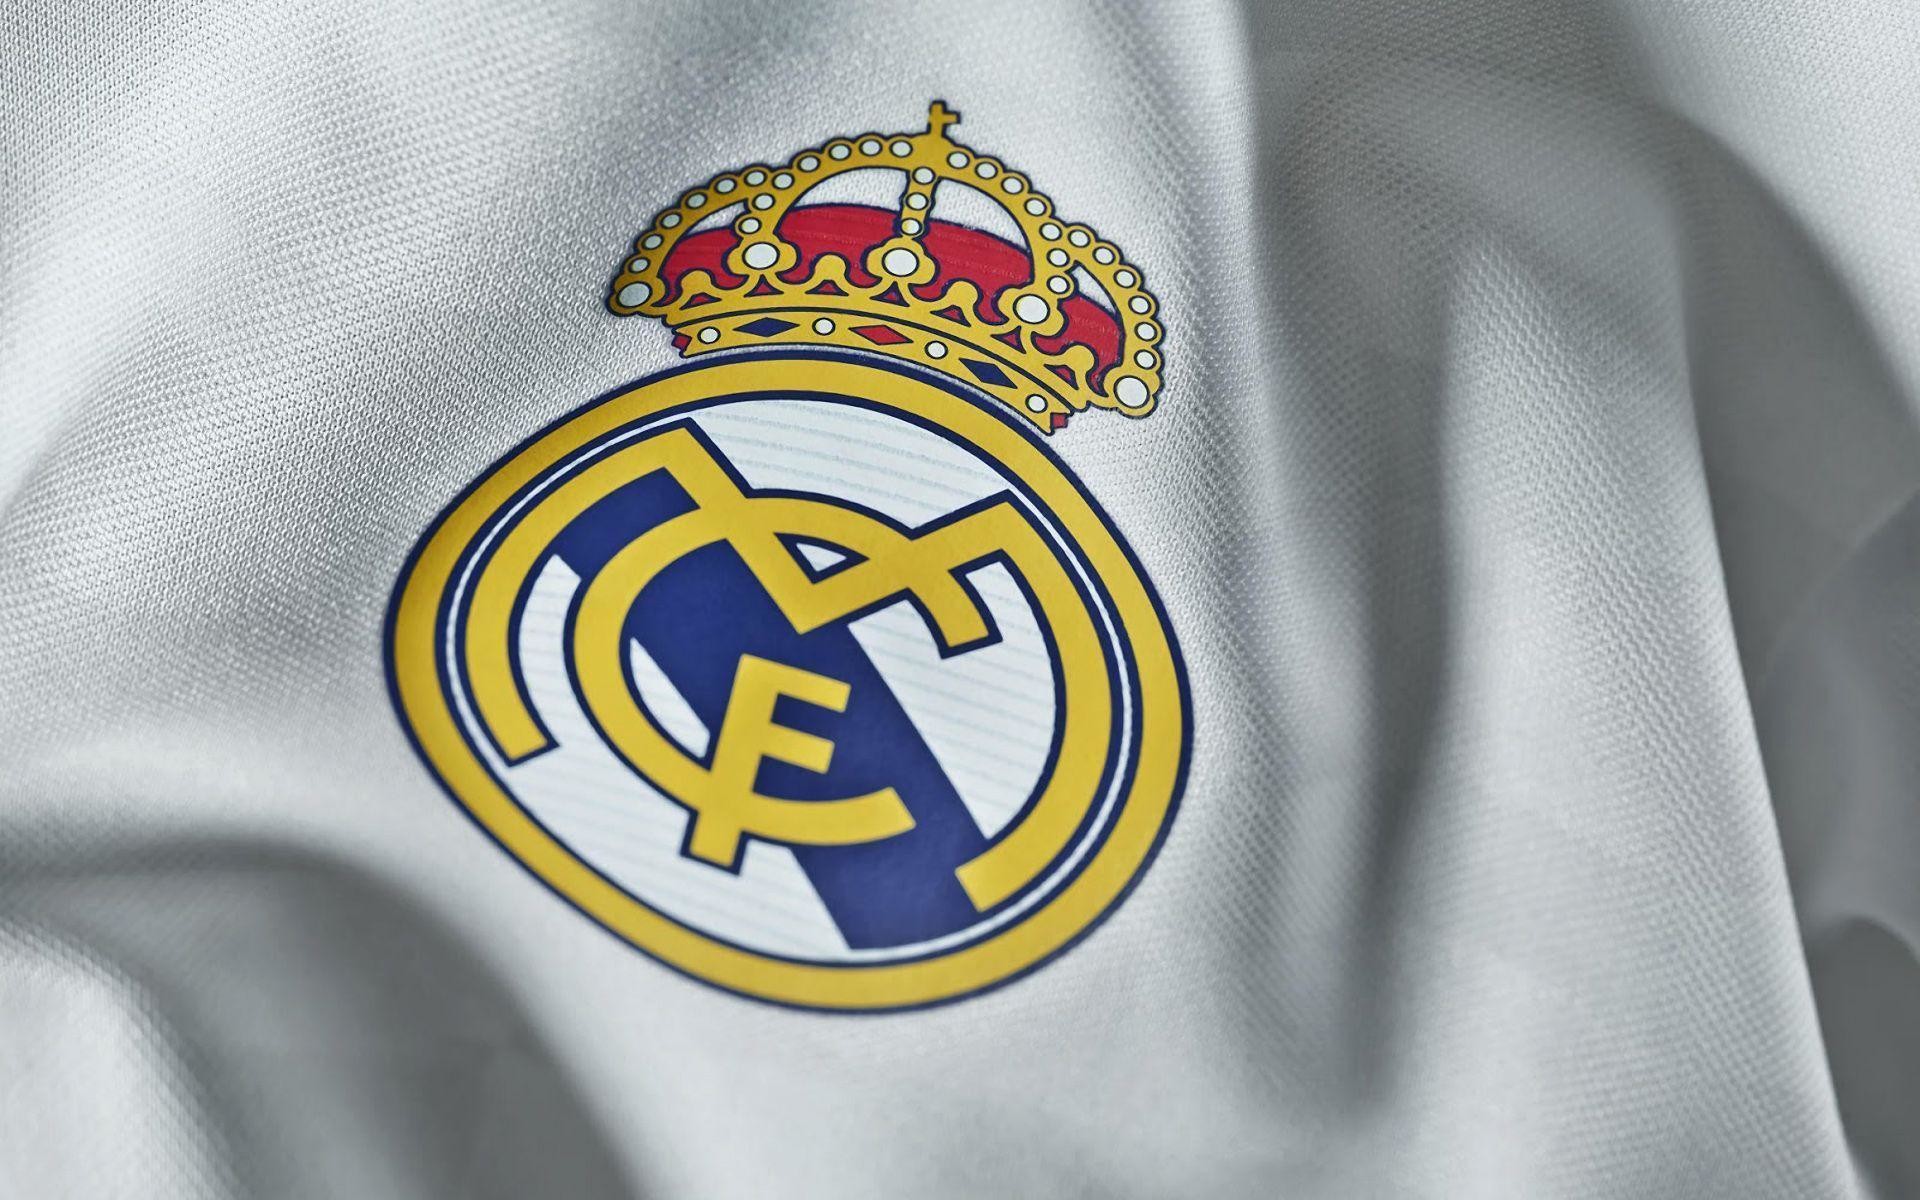 Real Madrid Wallpapers Full Hd - Real Madrid Badge On Shirt - HD Wallpaper 